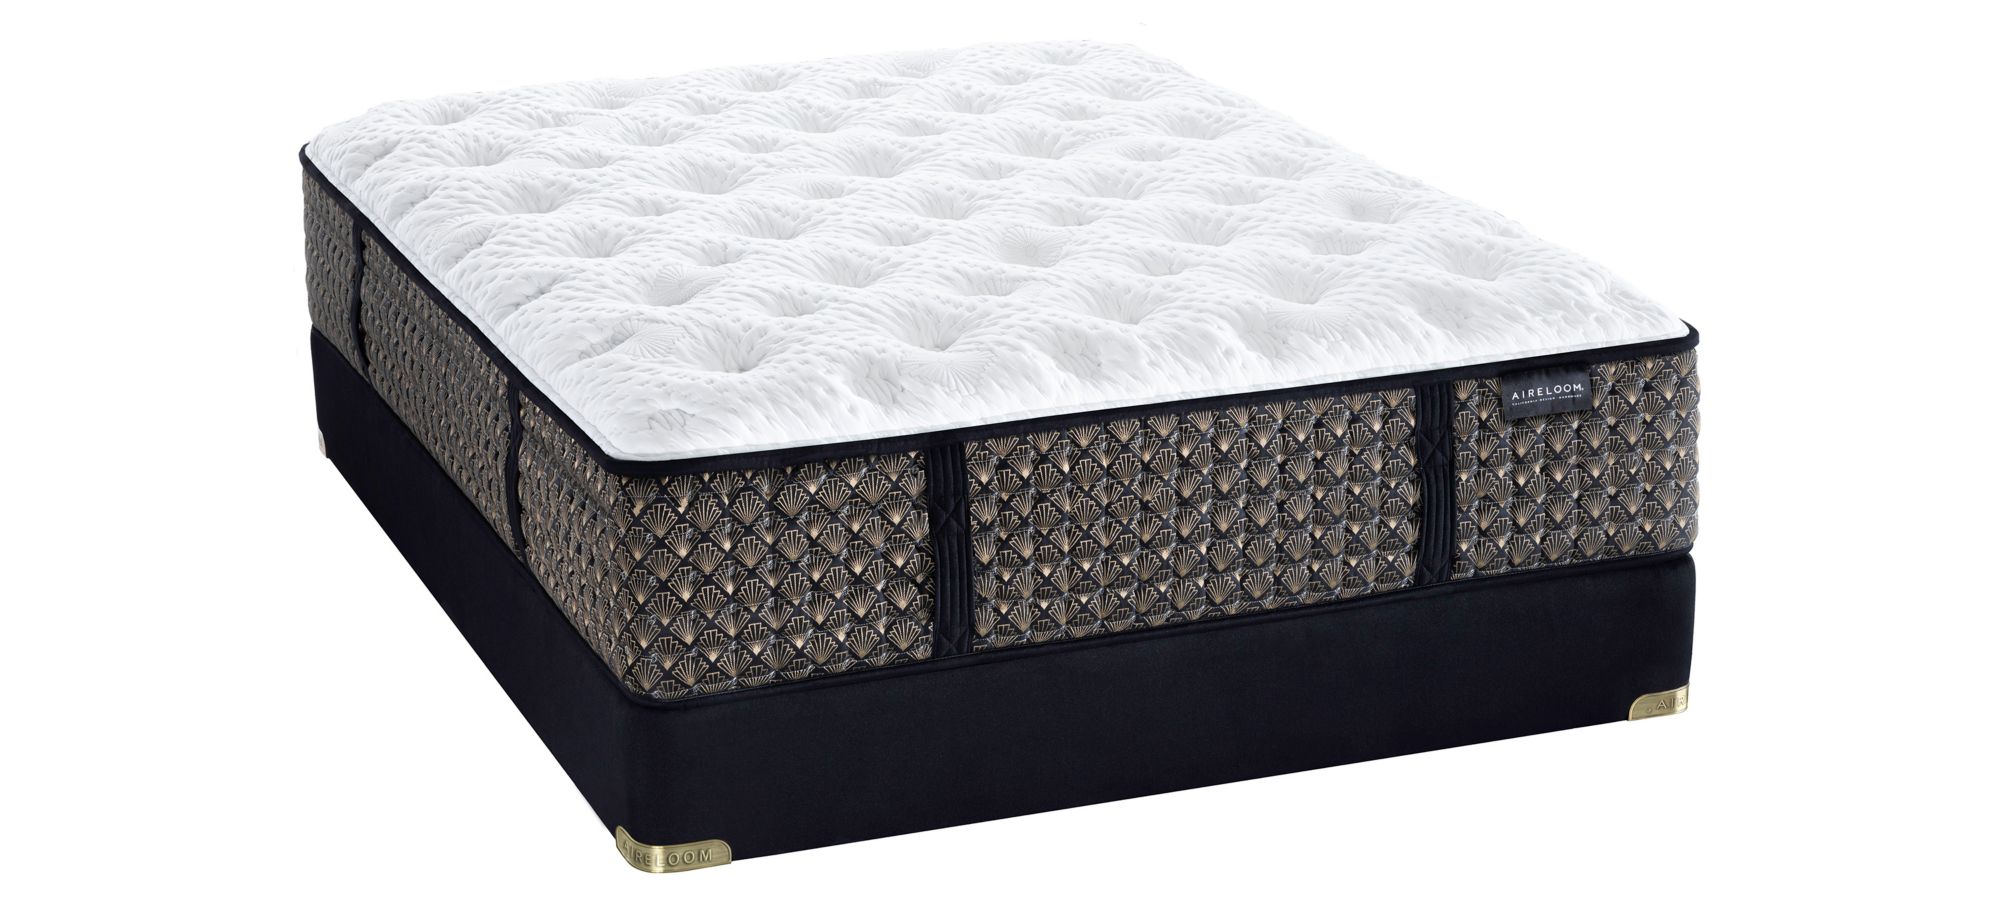 aireloom capella plush mattress